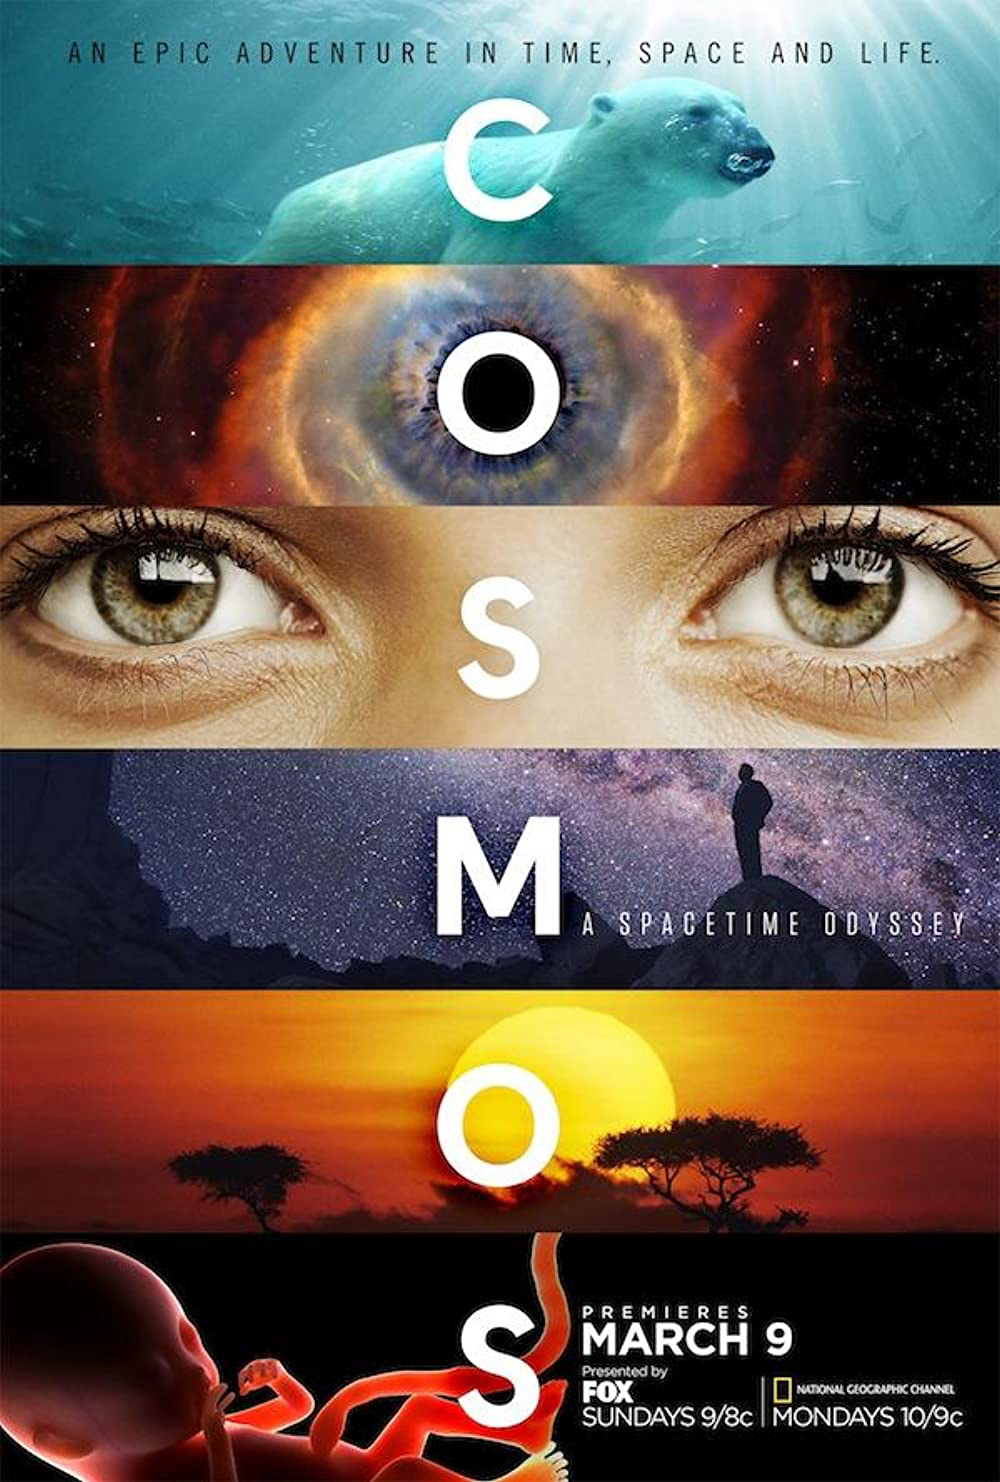 Xem Phim Vũ Trụ Kỳ Diệu Phần 1 (Cosmos: A Spacetime Odyssey Season 1)